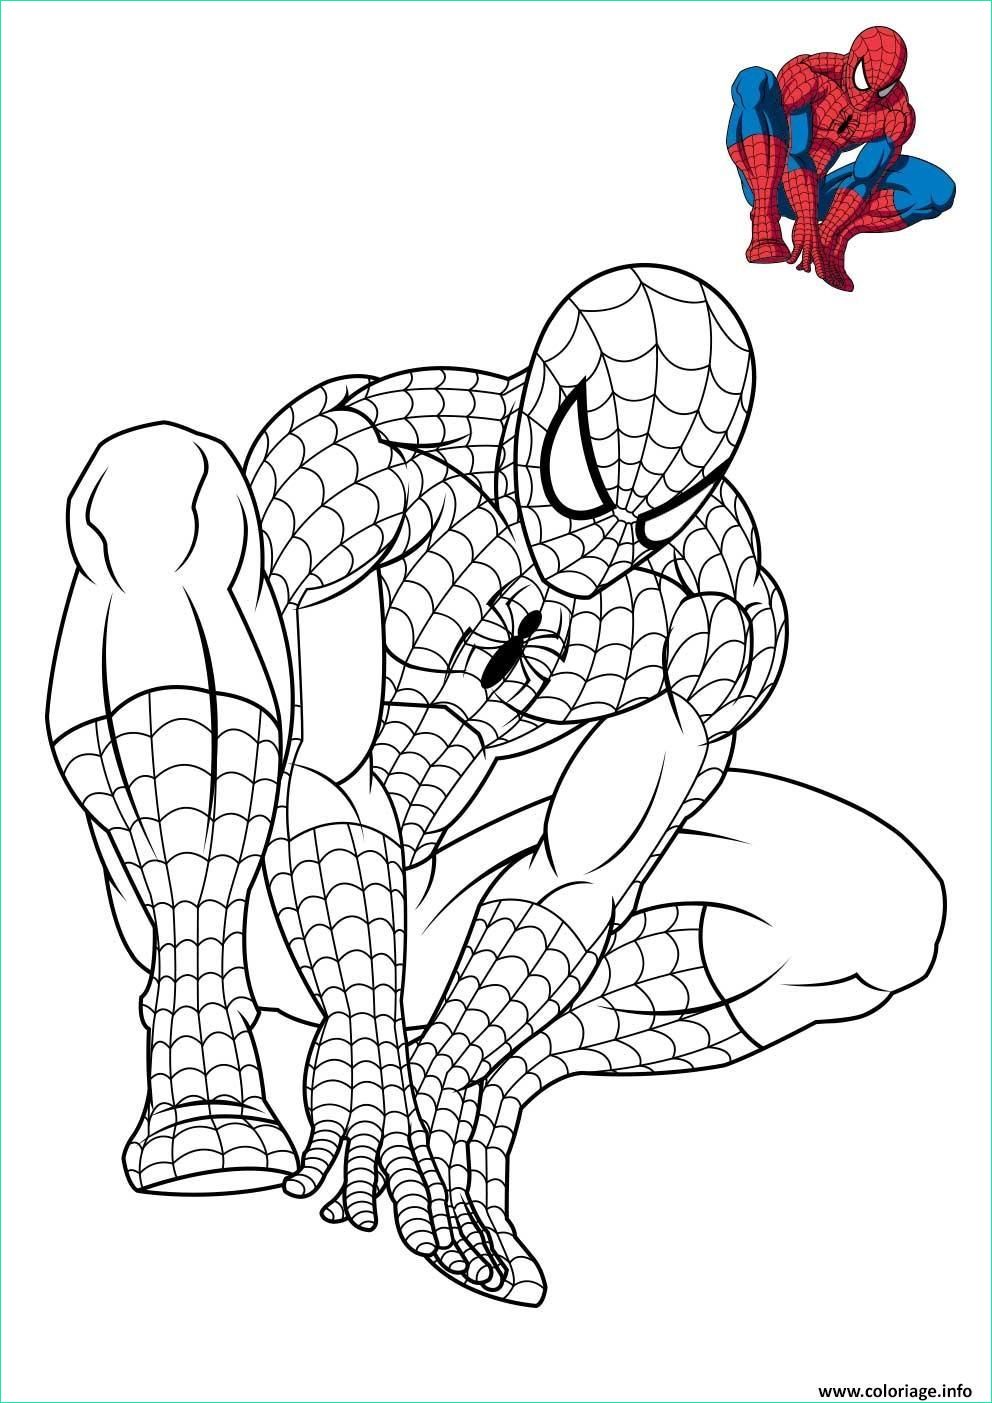 Coloriage De Spiderman Unique Stock 11 Fantaisie Coloriage Spiderman A Imprimer S Coloriage